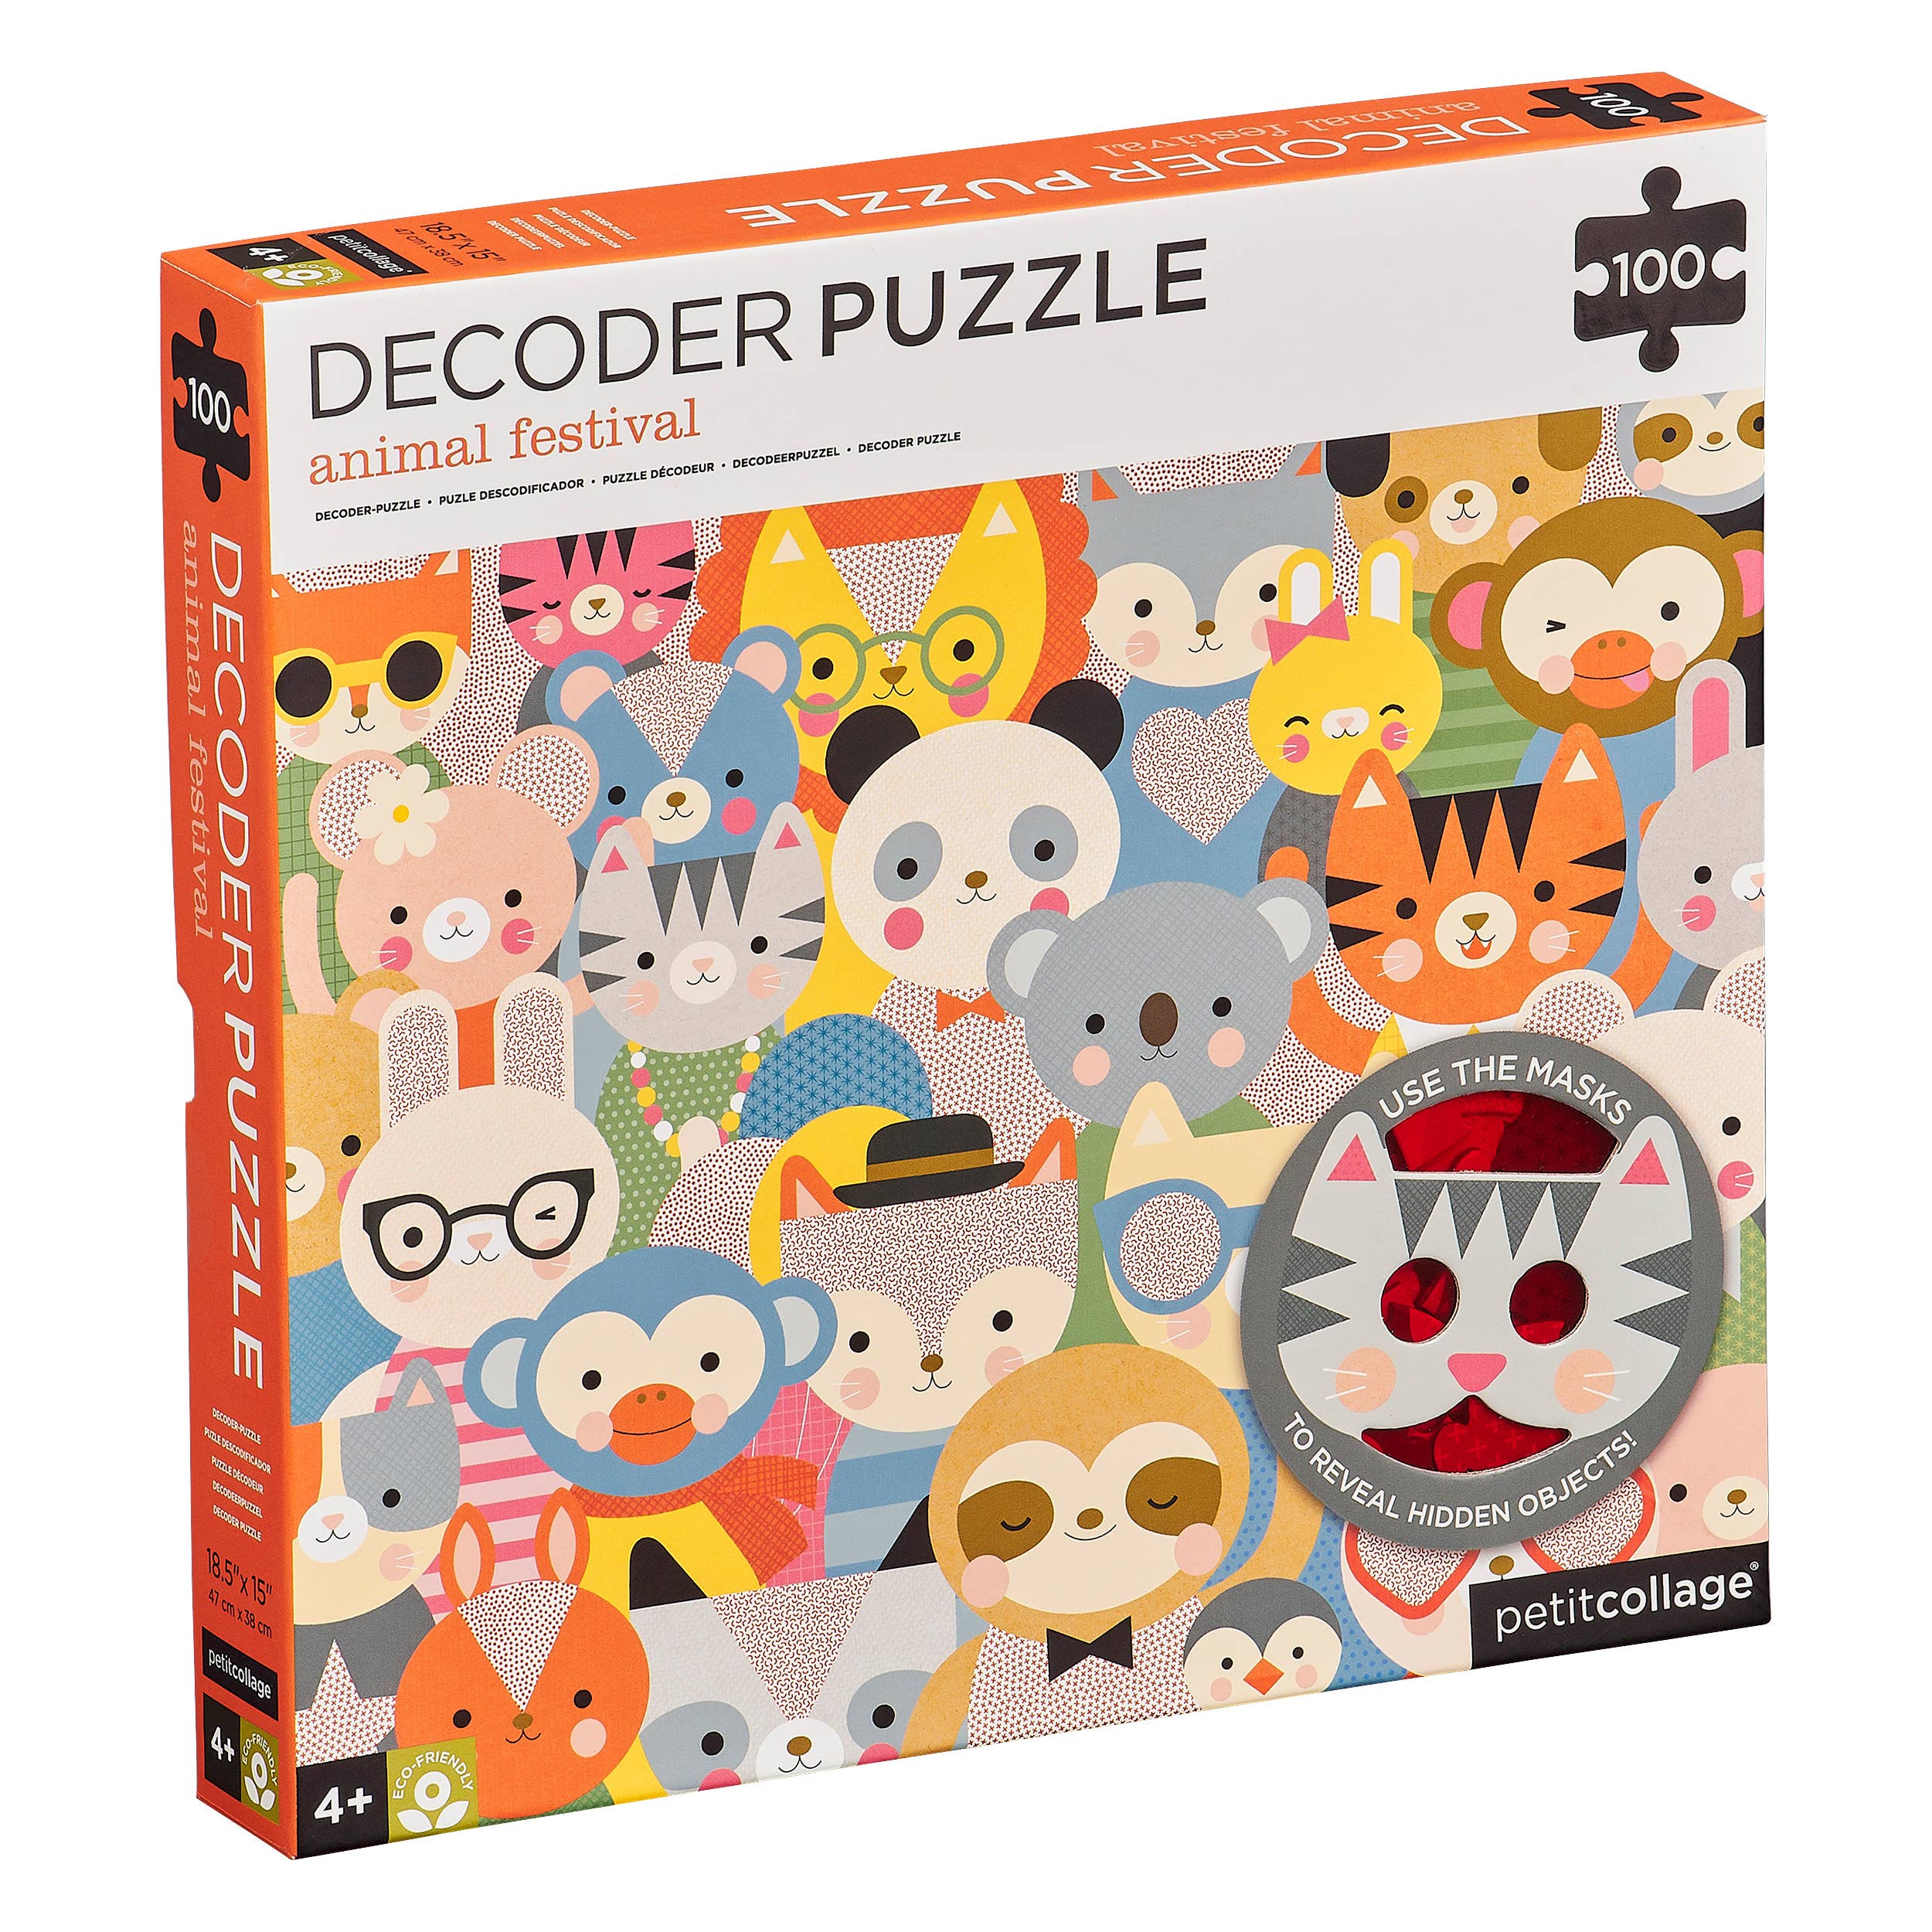 Animal Festival 100-Piece Decoder Puzzle